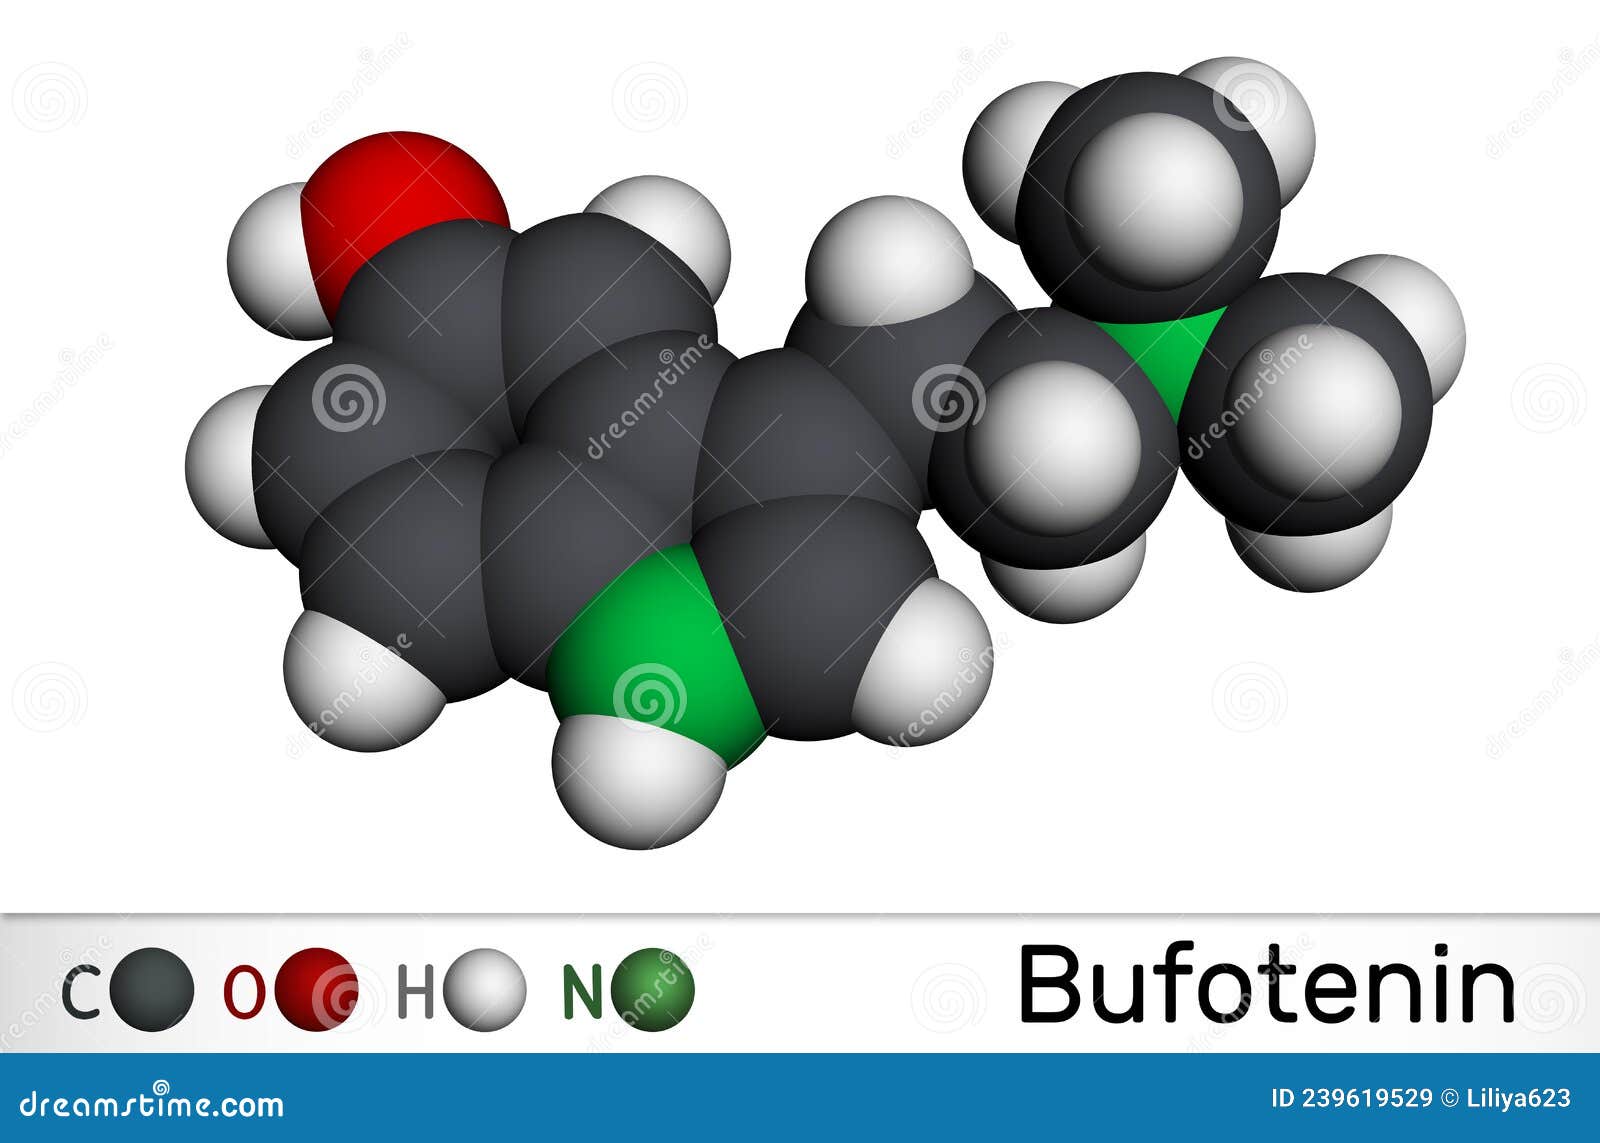 bufotenin alkaloid molecule. it is tryptamine derivative, hallucinogenic serotonin analog, found in toad skins, mushrooms.